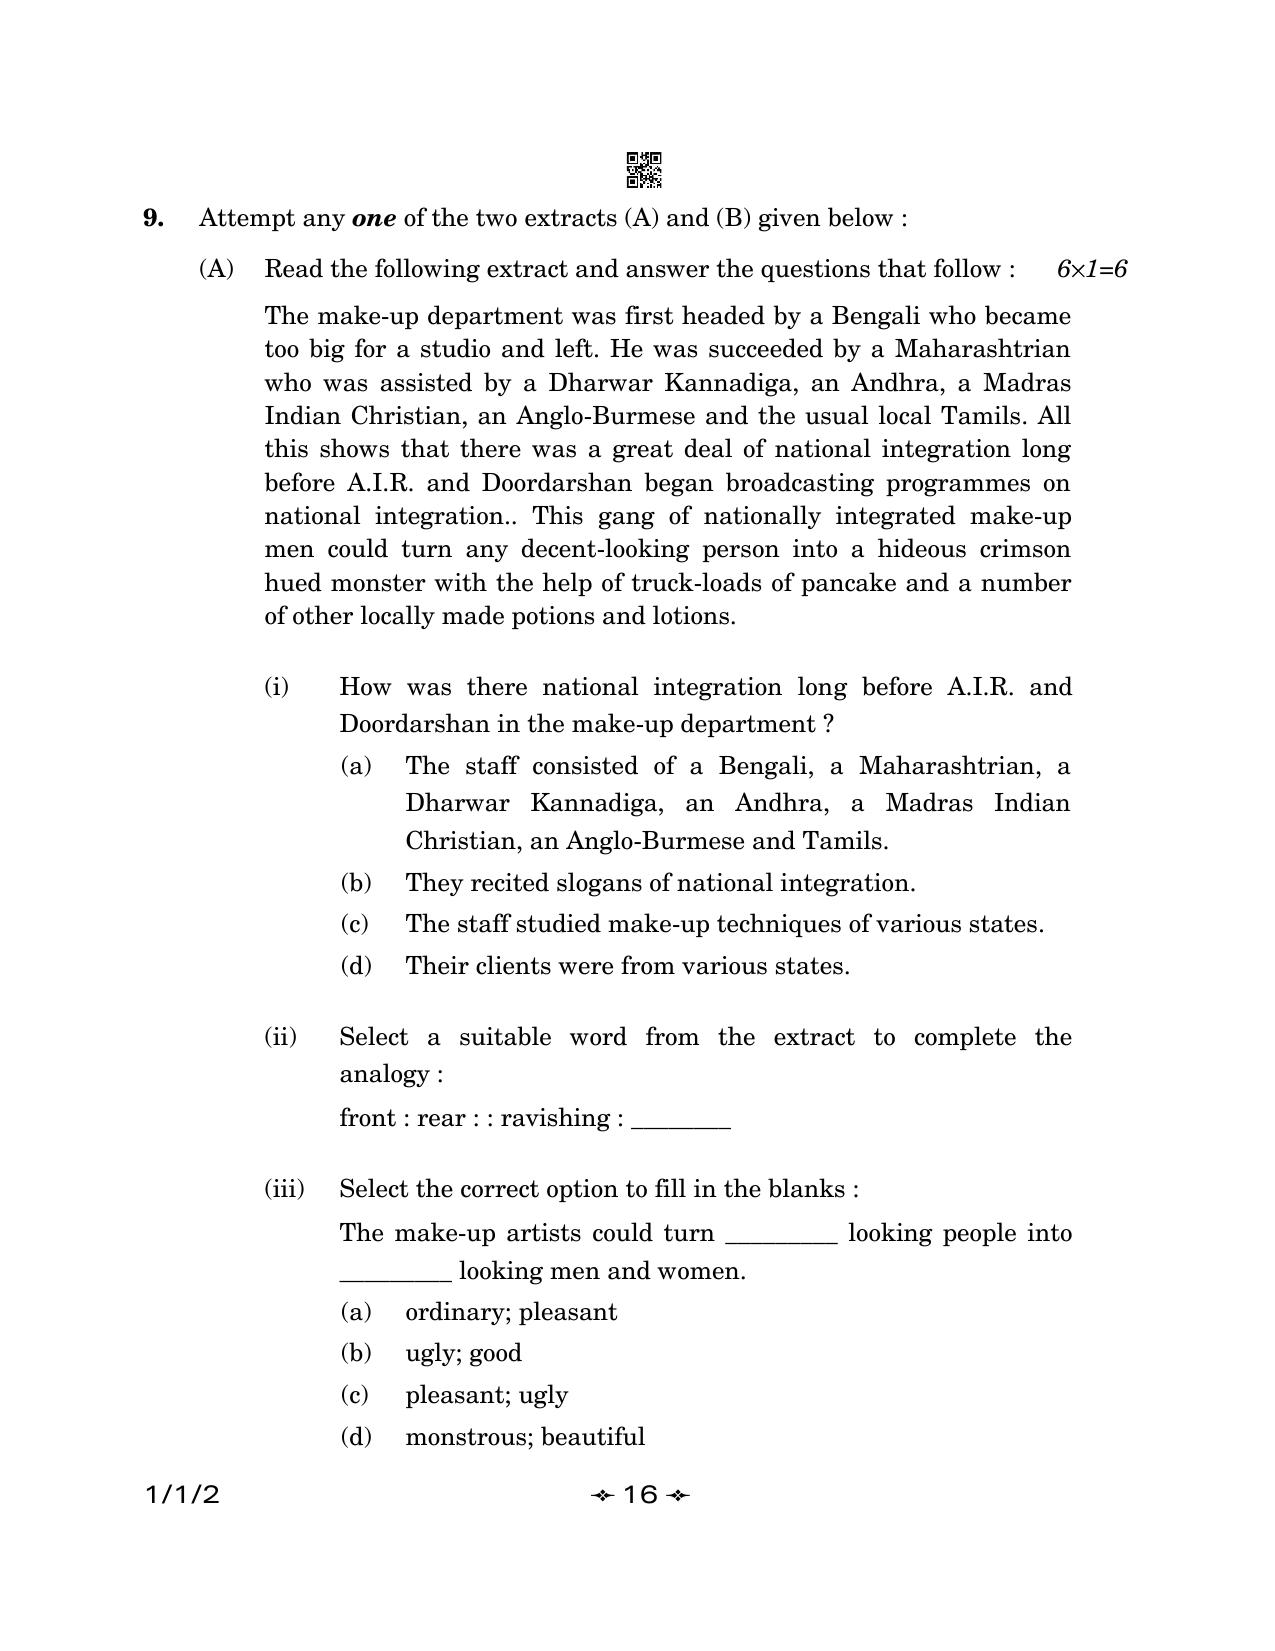 CBSE Class 12 1-1-2 English Core 2023 Question Paper - Page 16